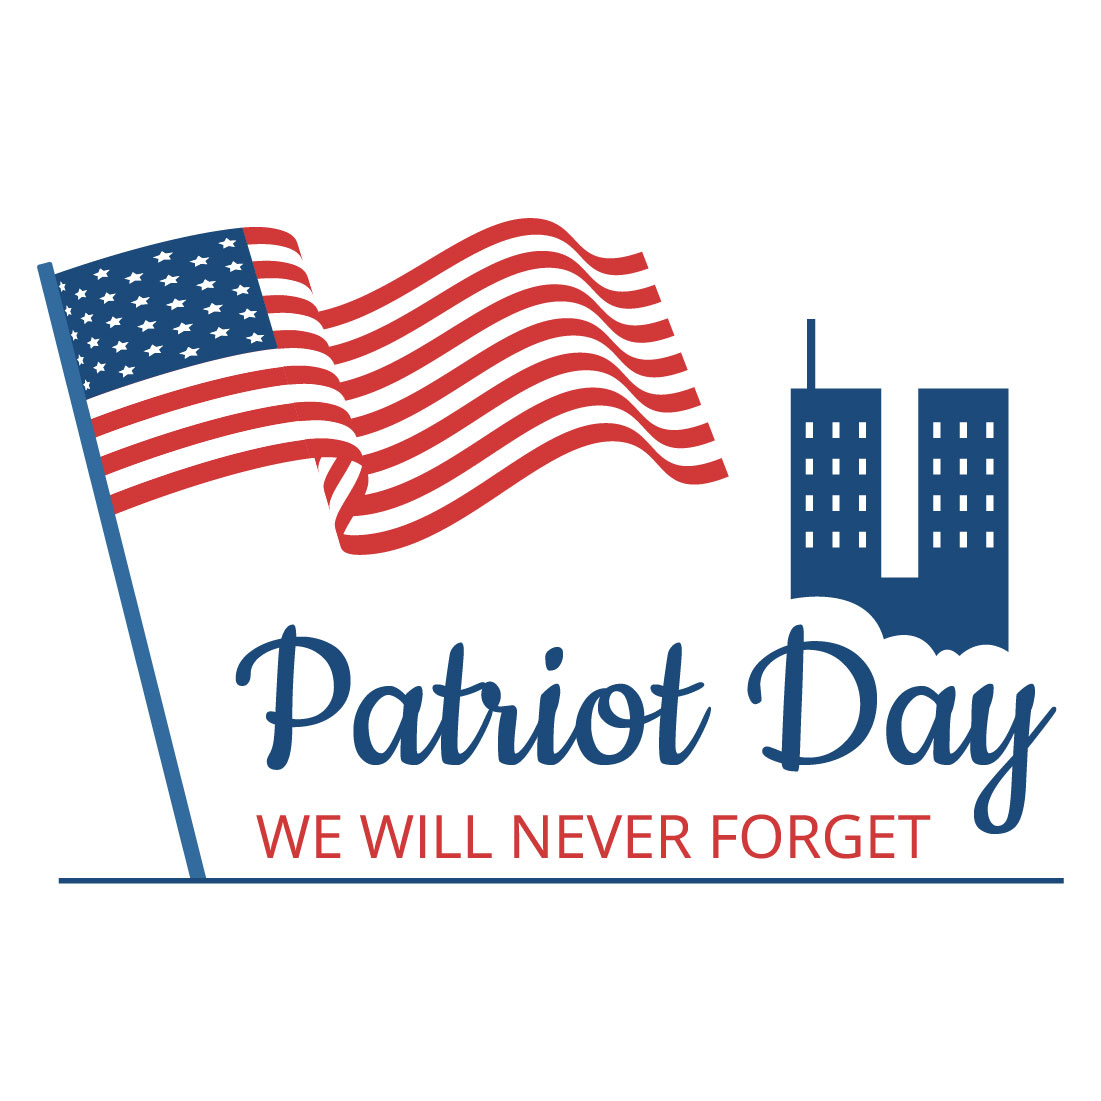 10 Patriot Day USA Celebration Illustration Preview Image.